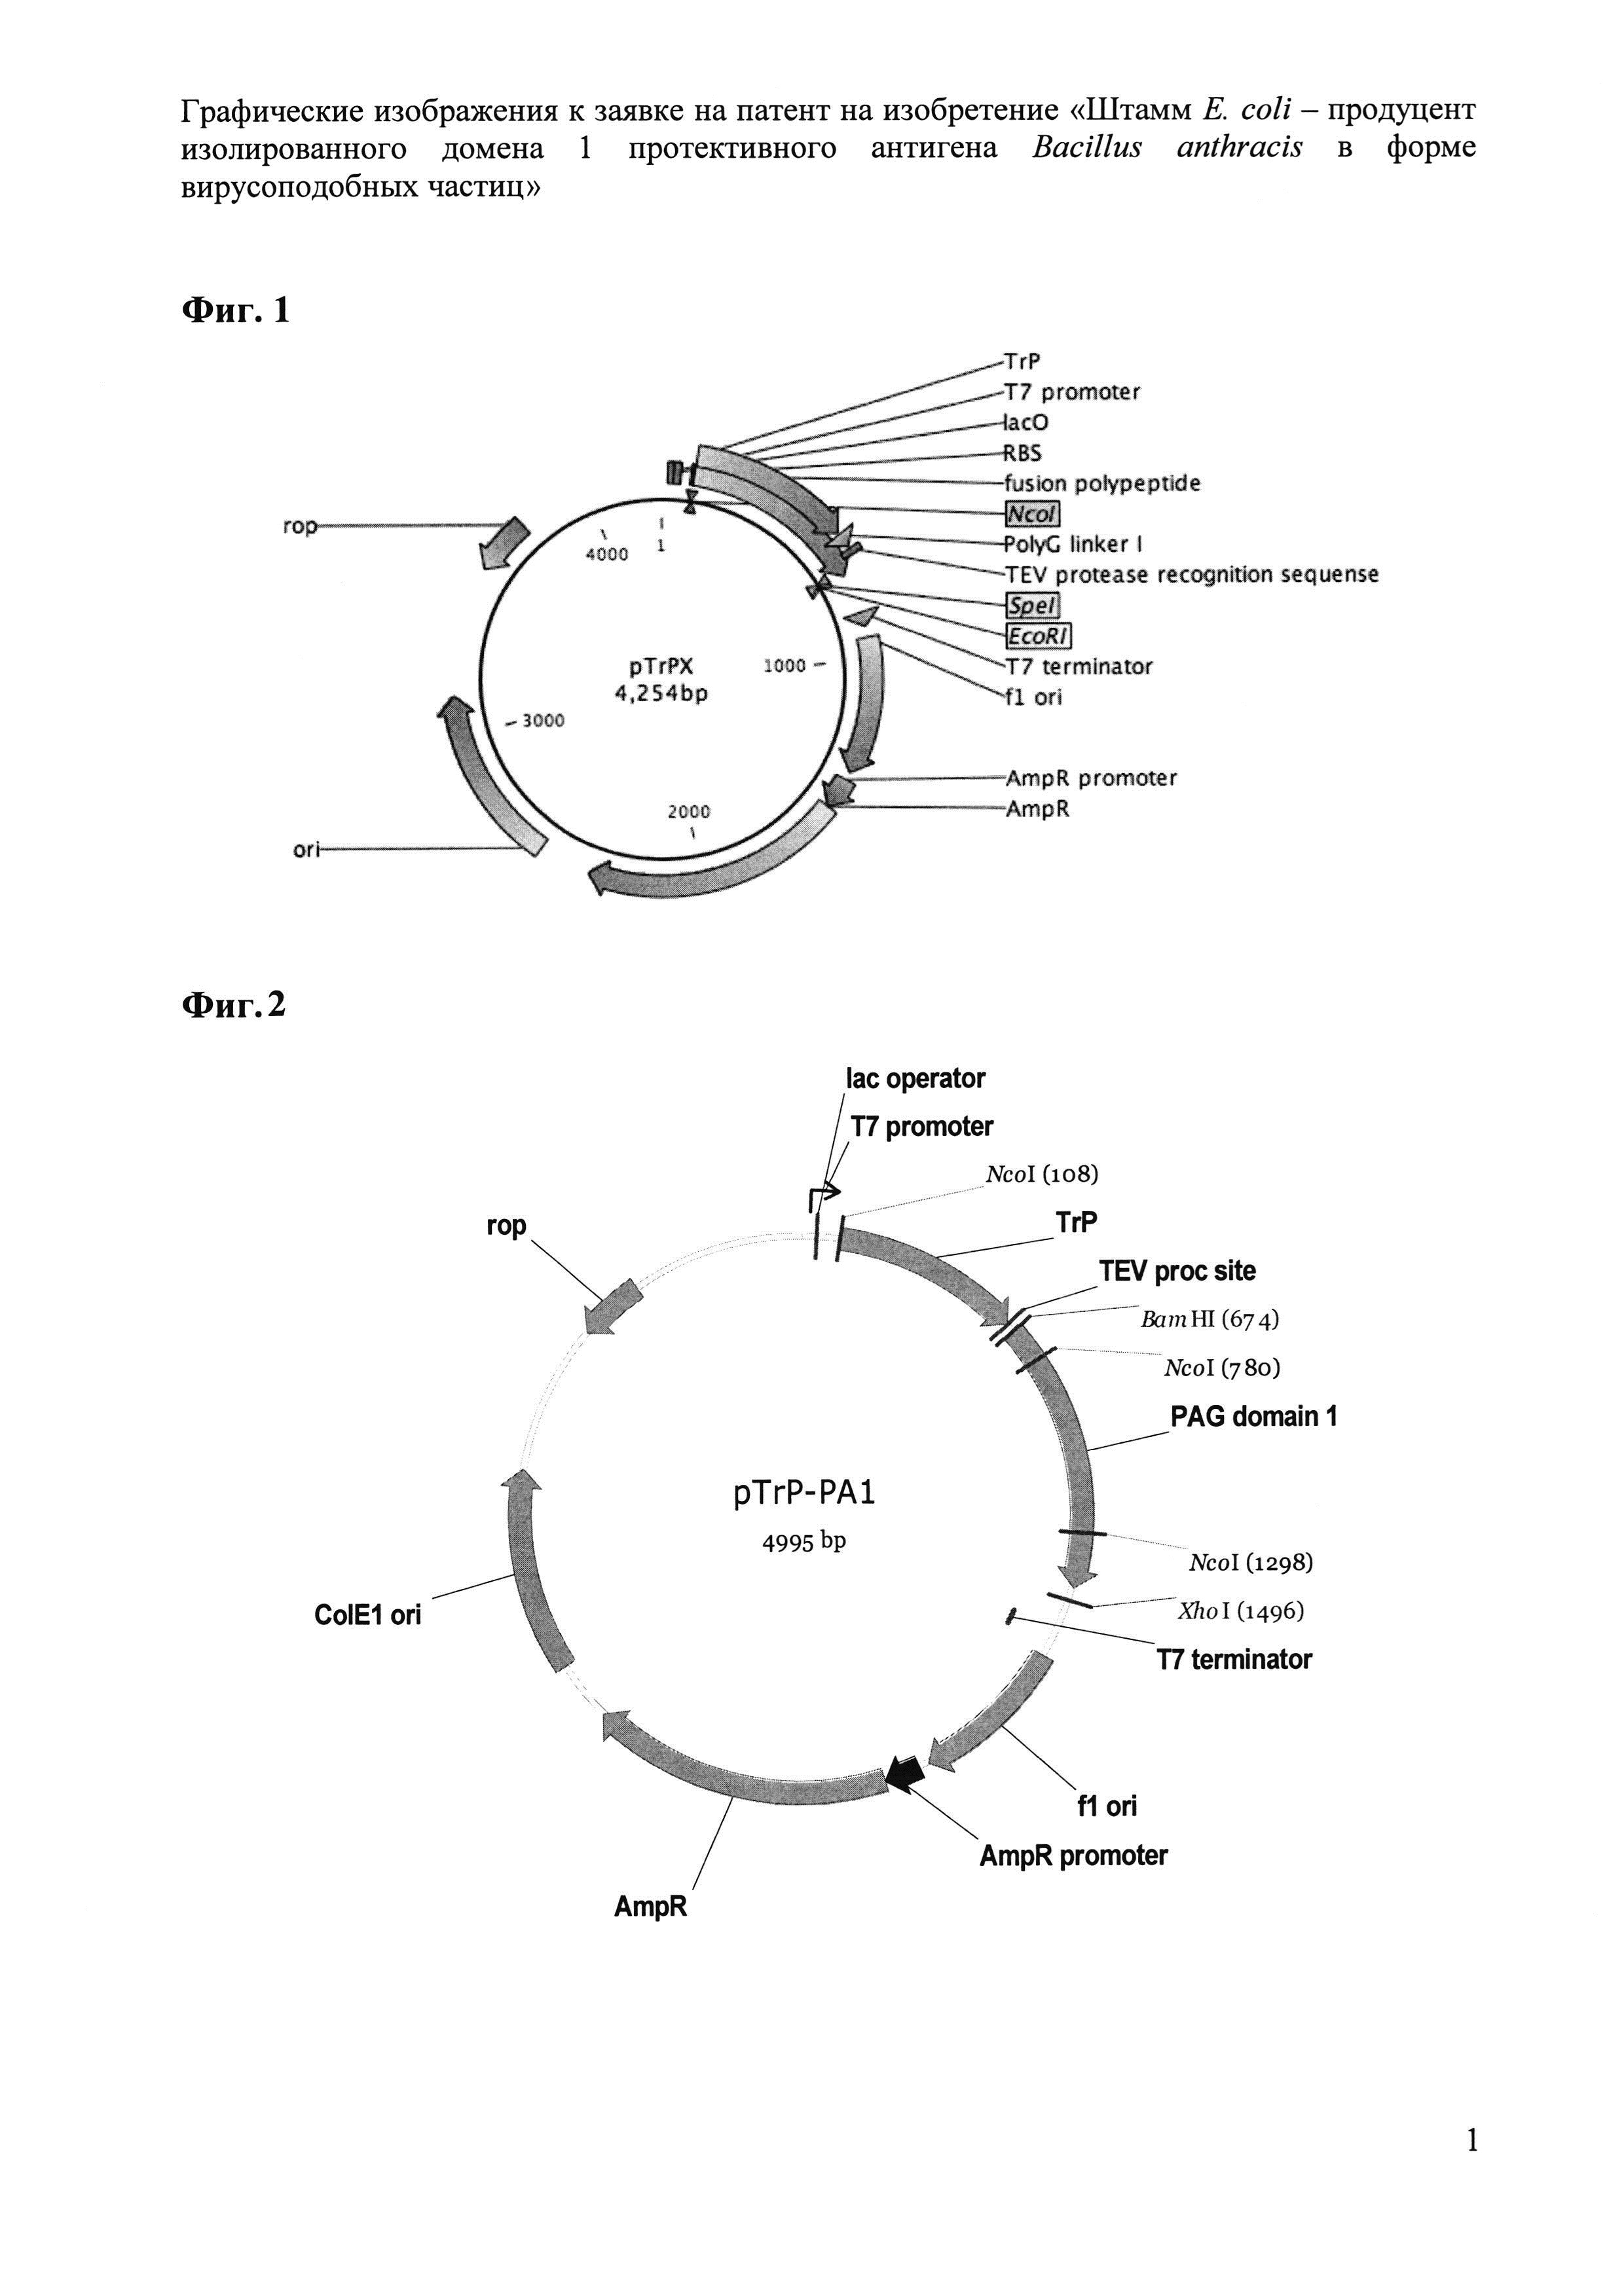 Штамм E. coli - продуцент изолированного домена 1 протективного антигена Bacillus anthracis в форме вирусоподобных частиц